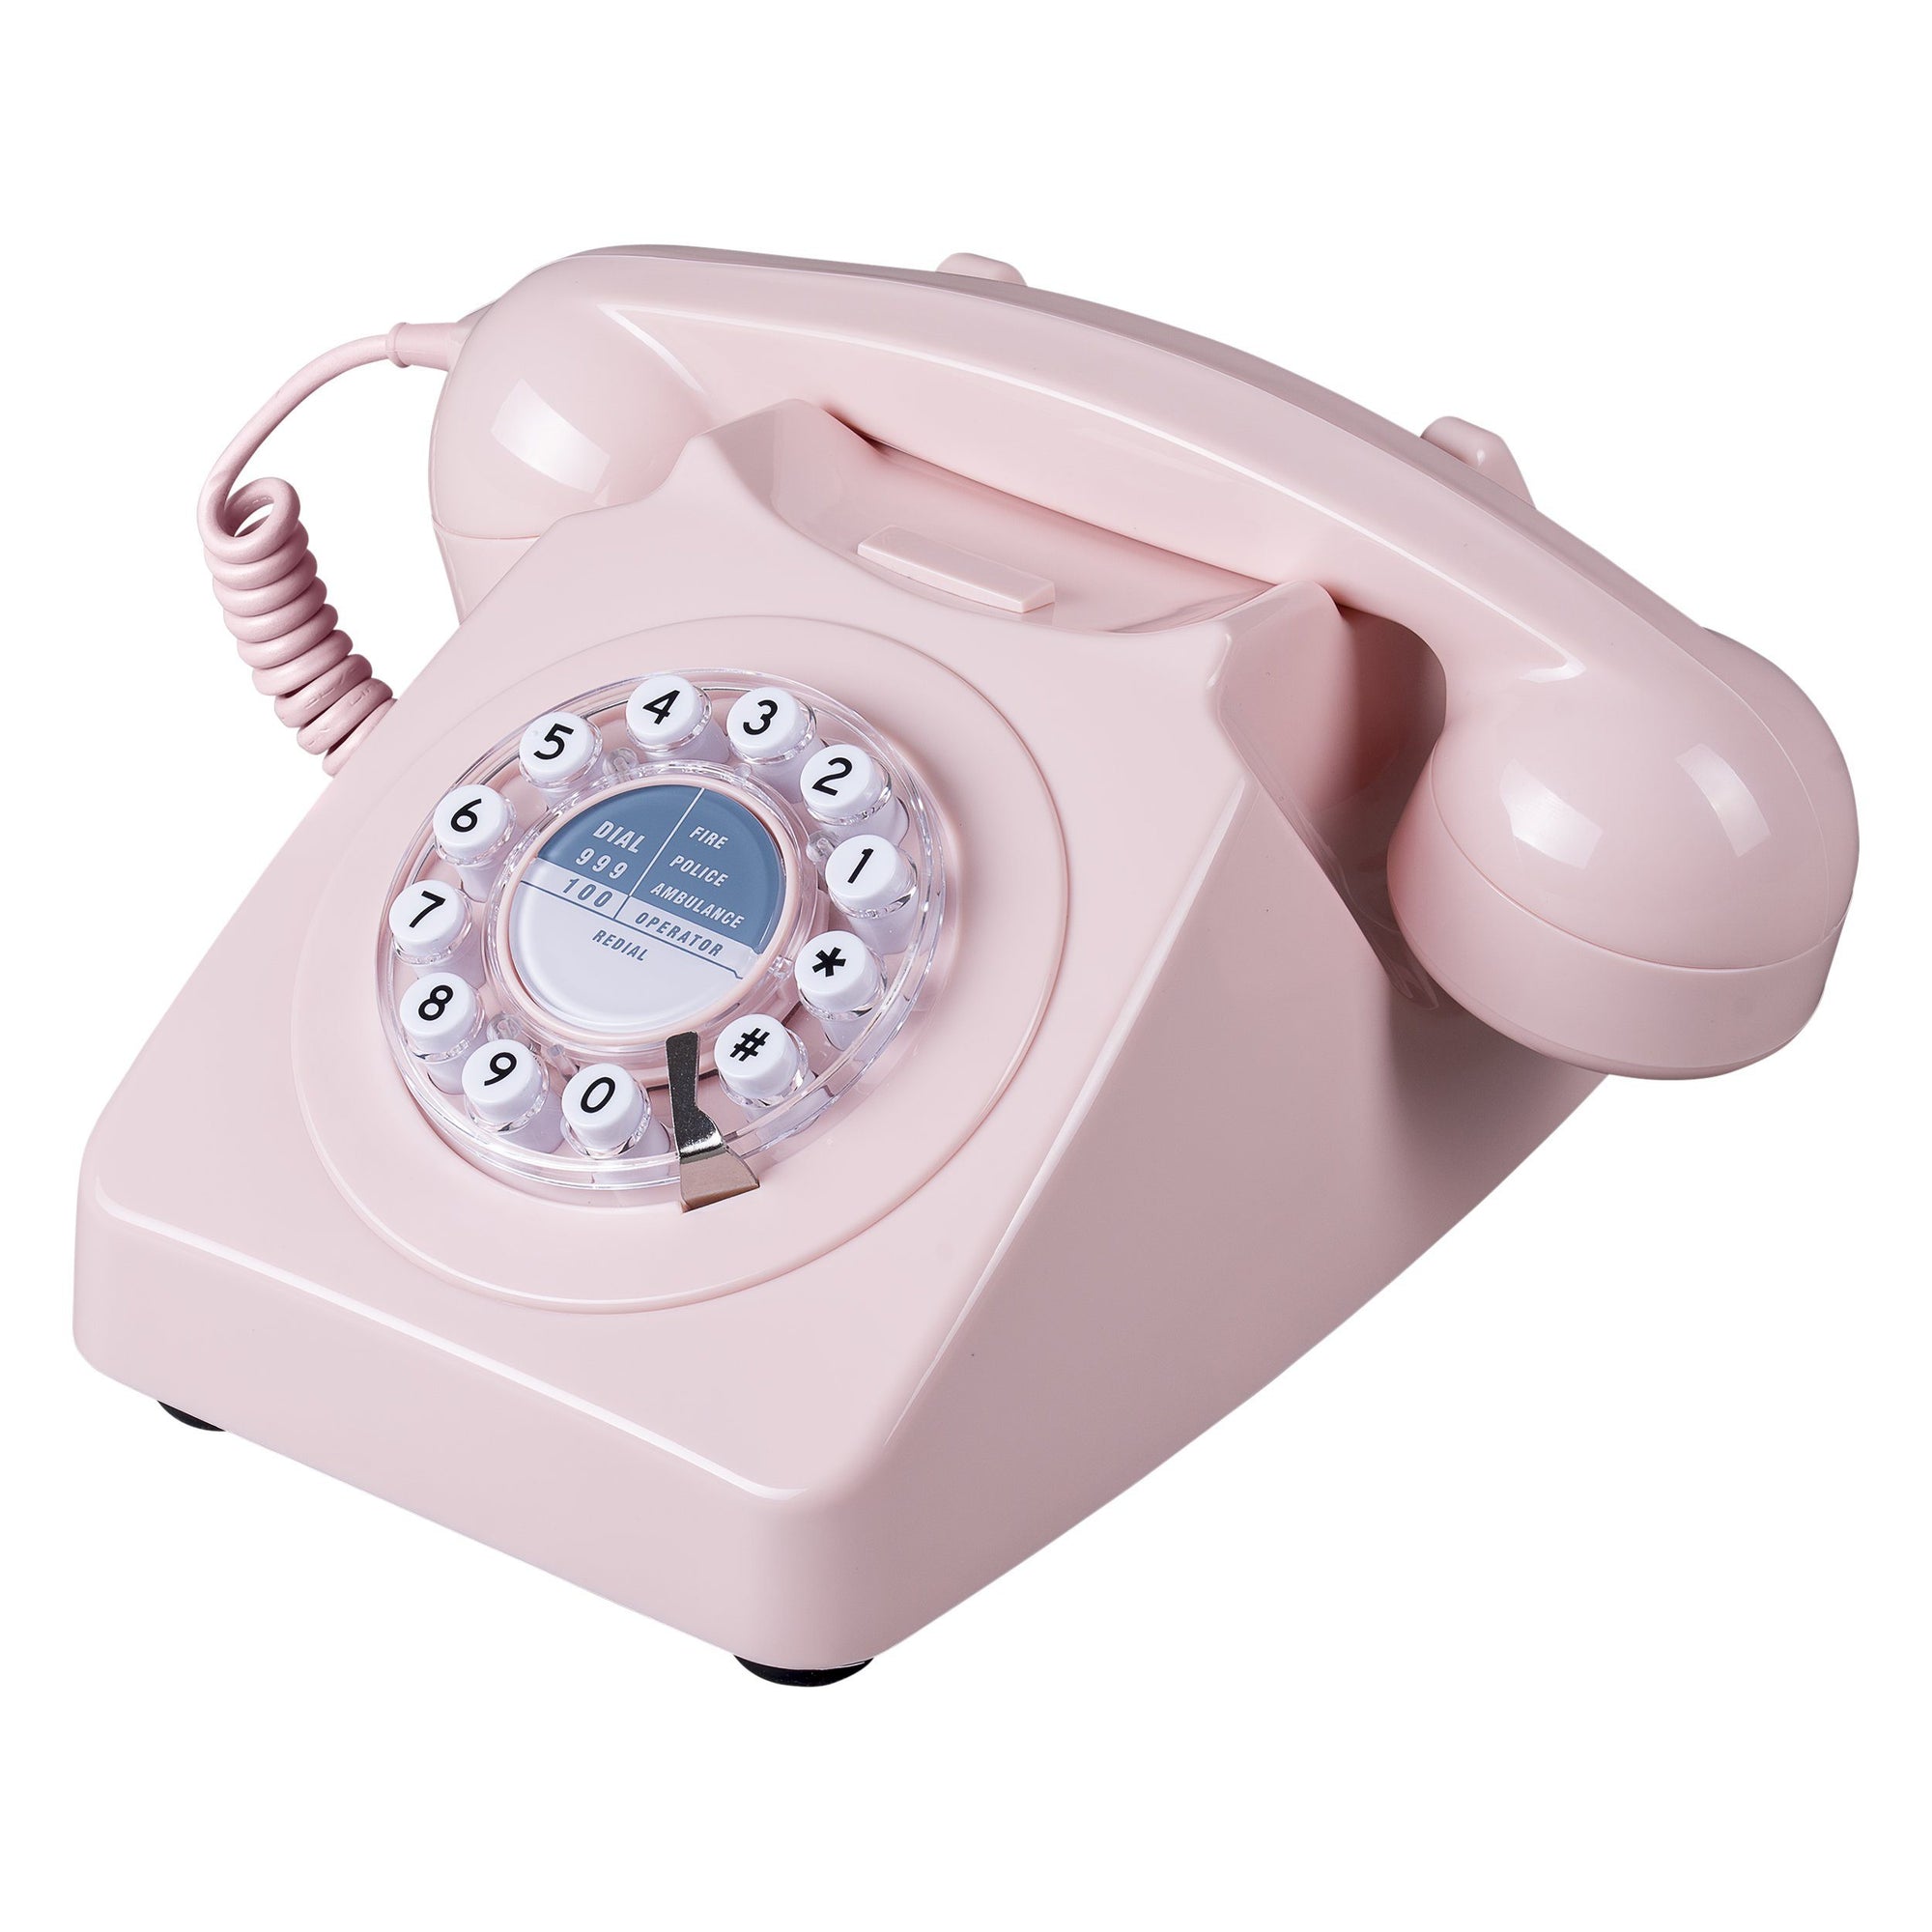 Phone 746 Dusky Pink - BouChic 